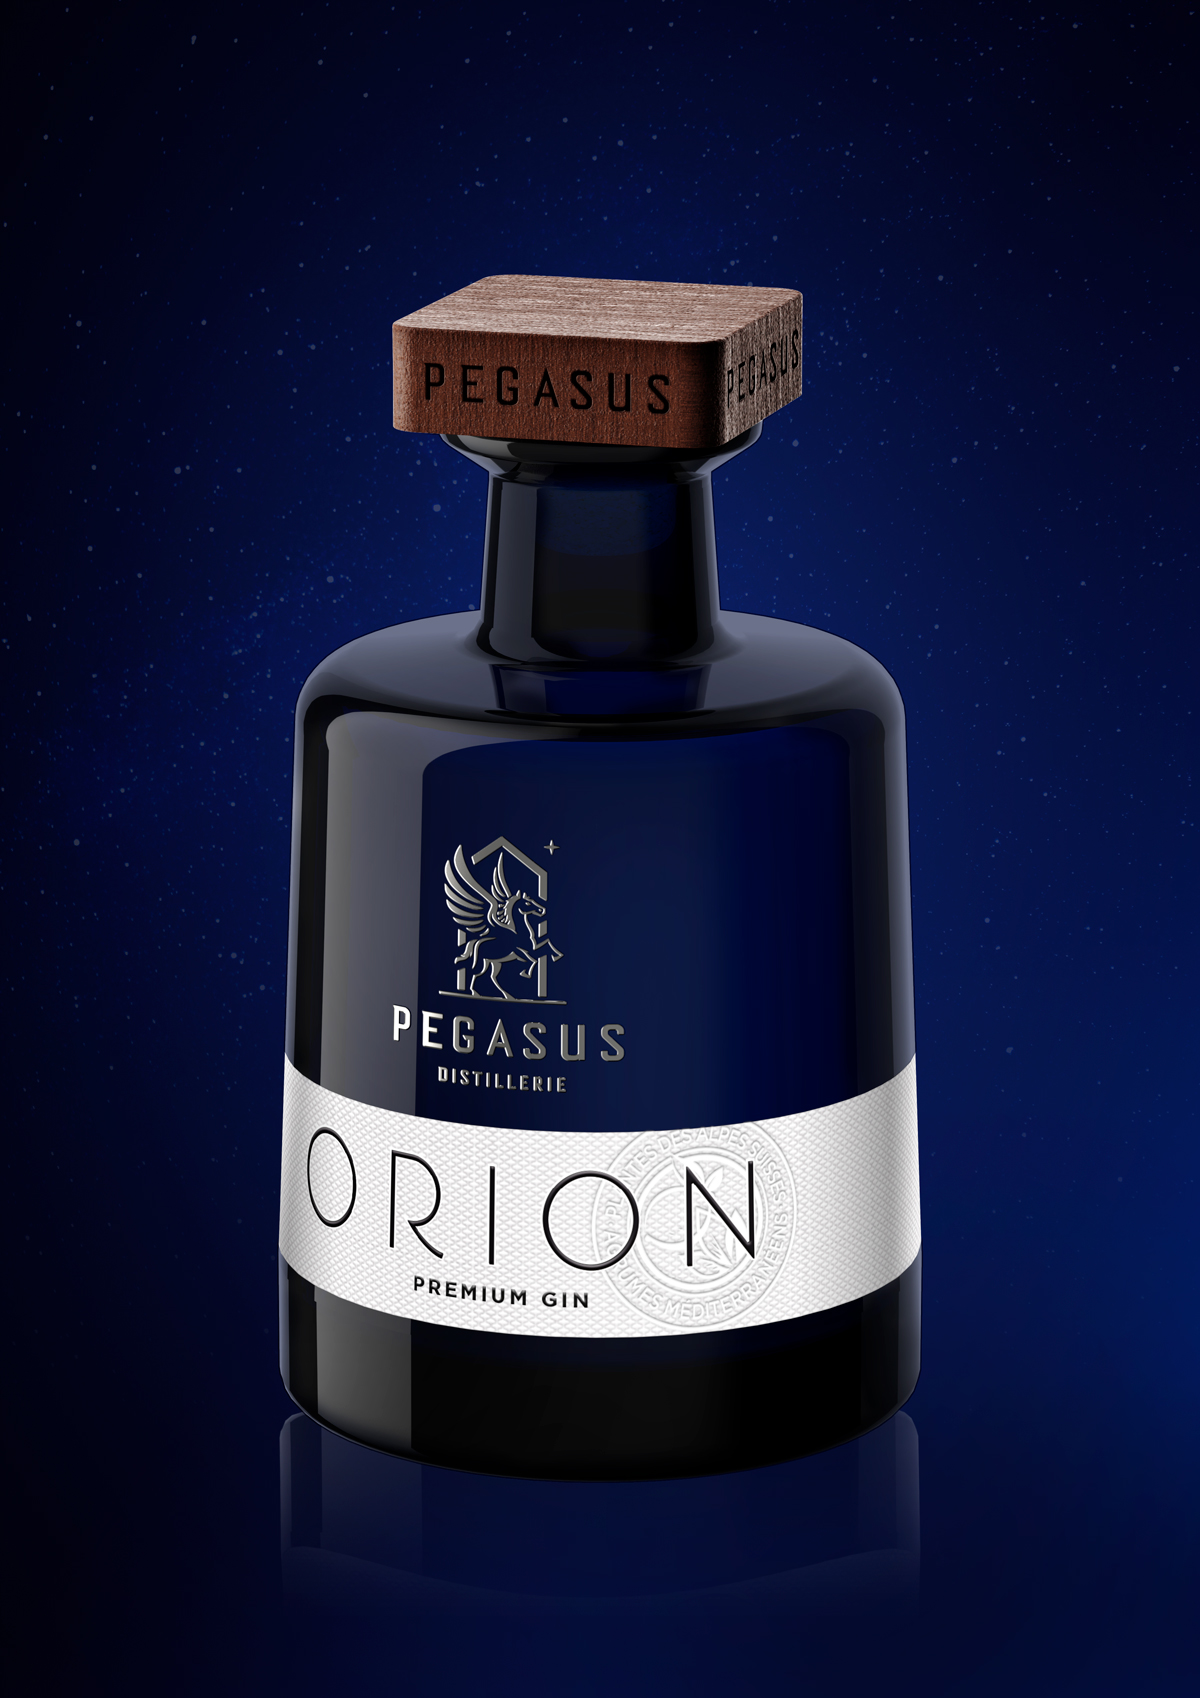 Maison Linea Creates Brandbook and Visual Identity for Orion Premium Gin